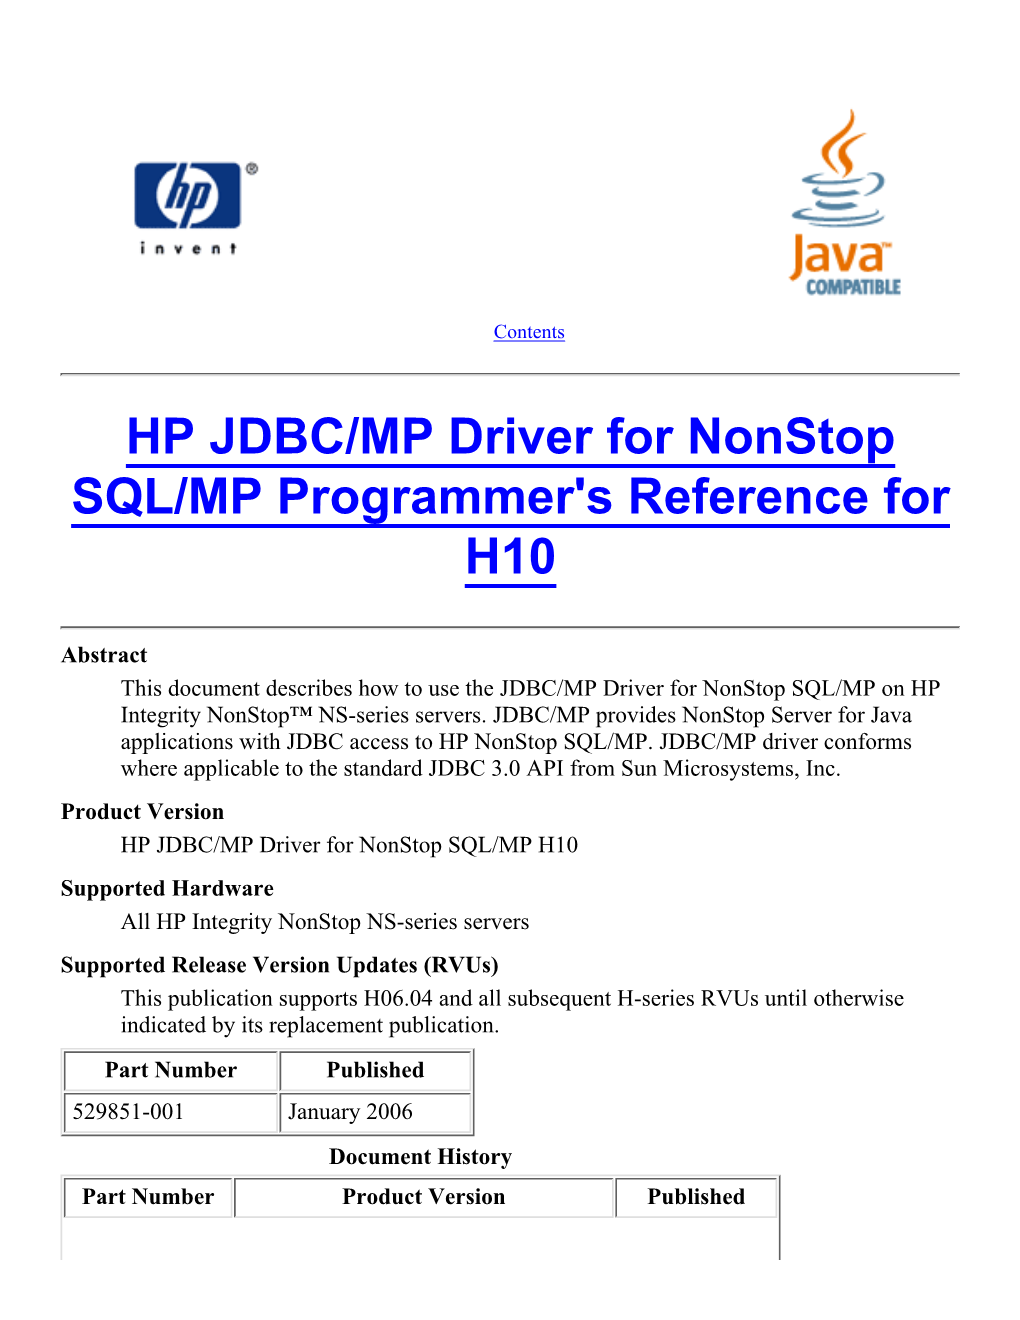 JDBC Driver for SQL/MP